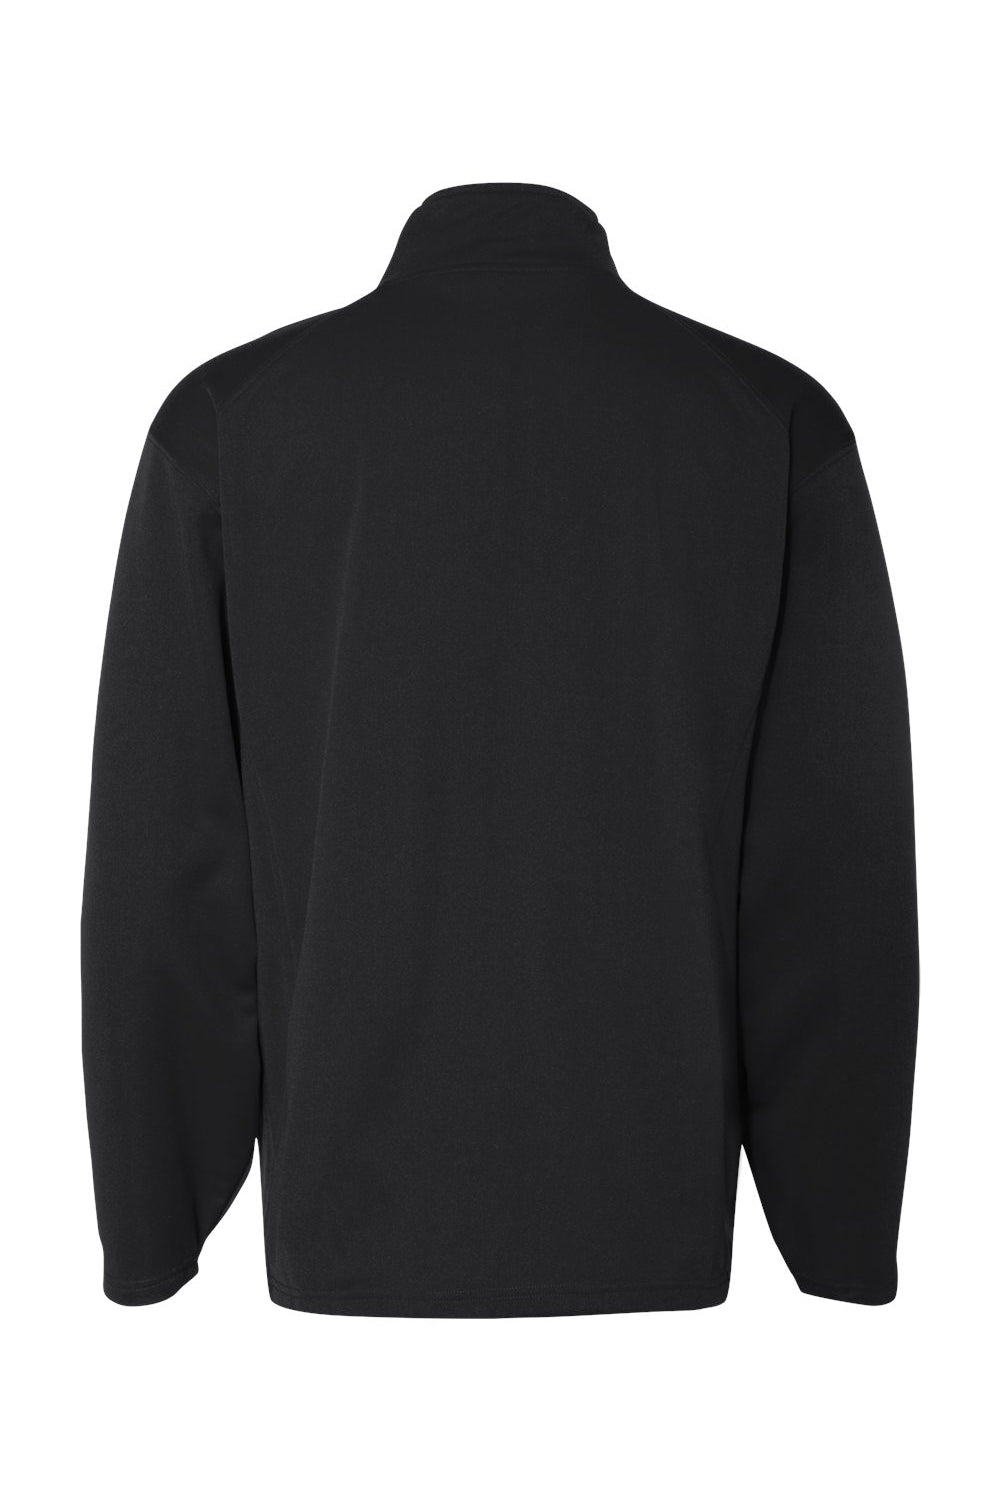 Badger 1480 Mens Performance Moisture Wicking Fleece 1/4 Zip Pullover Black Flat Back